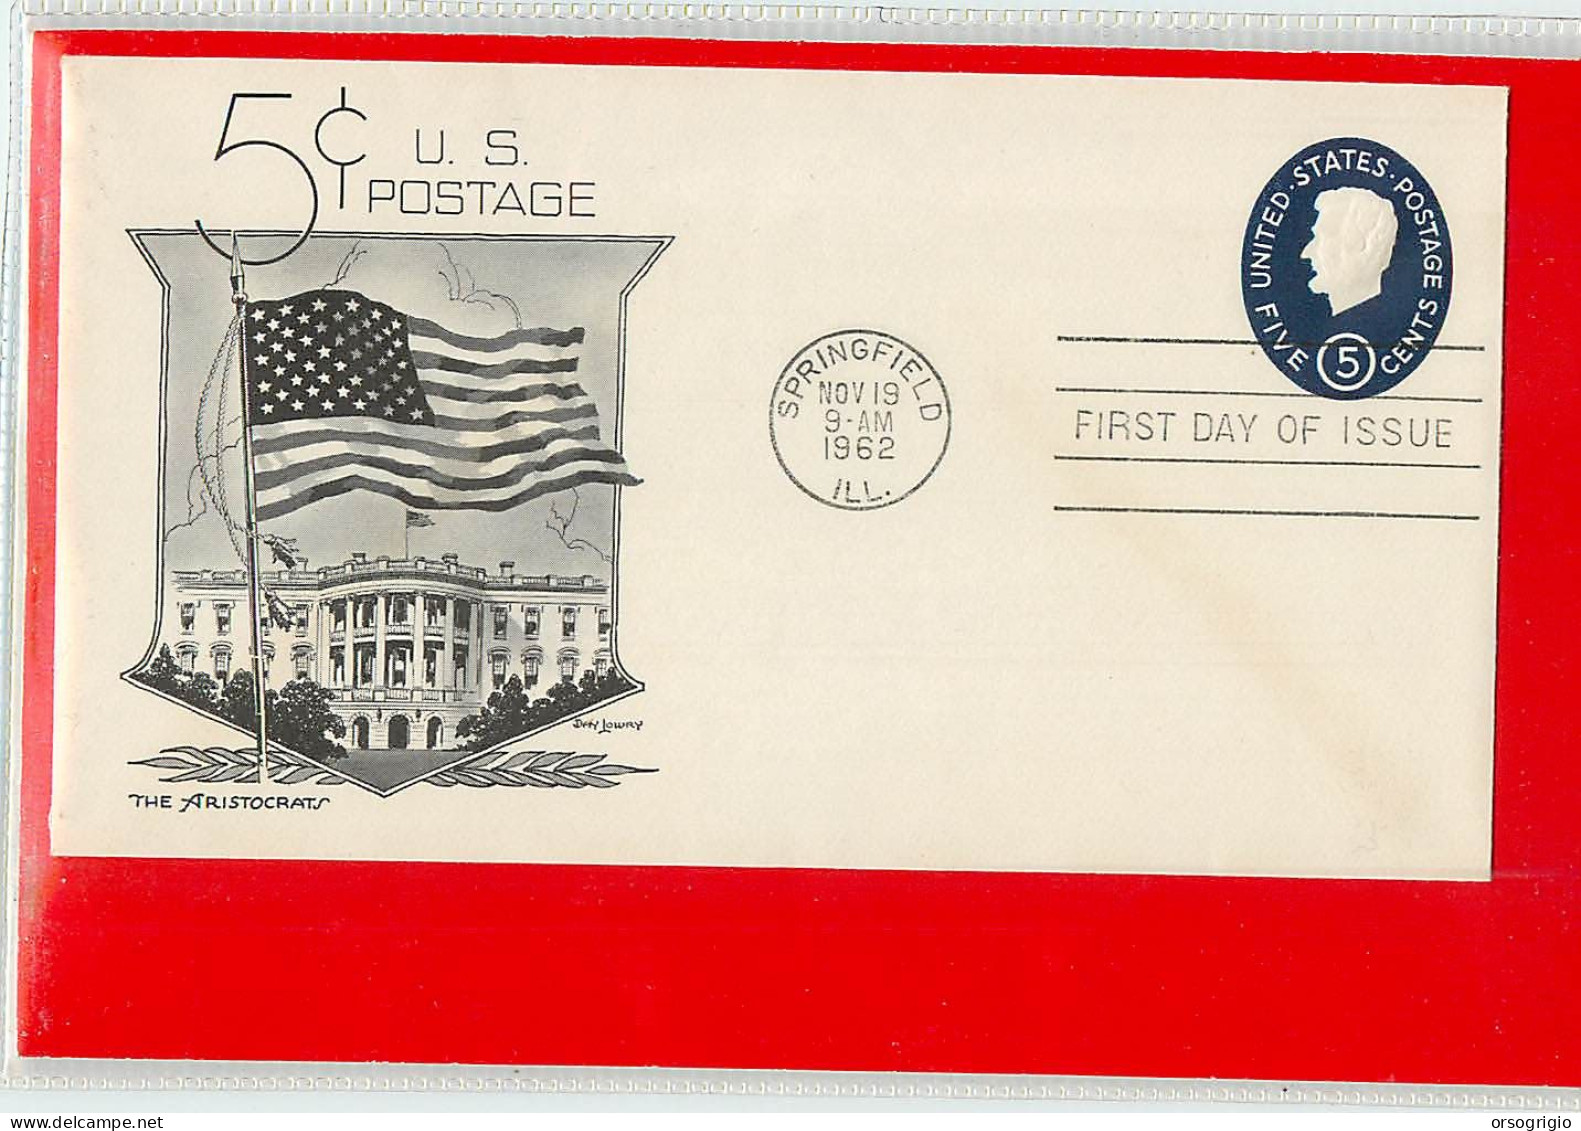 USA - EMBOSSED STAMPED ENVELOPE - FDC 1962  5c. - 1961-80